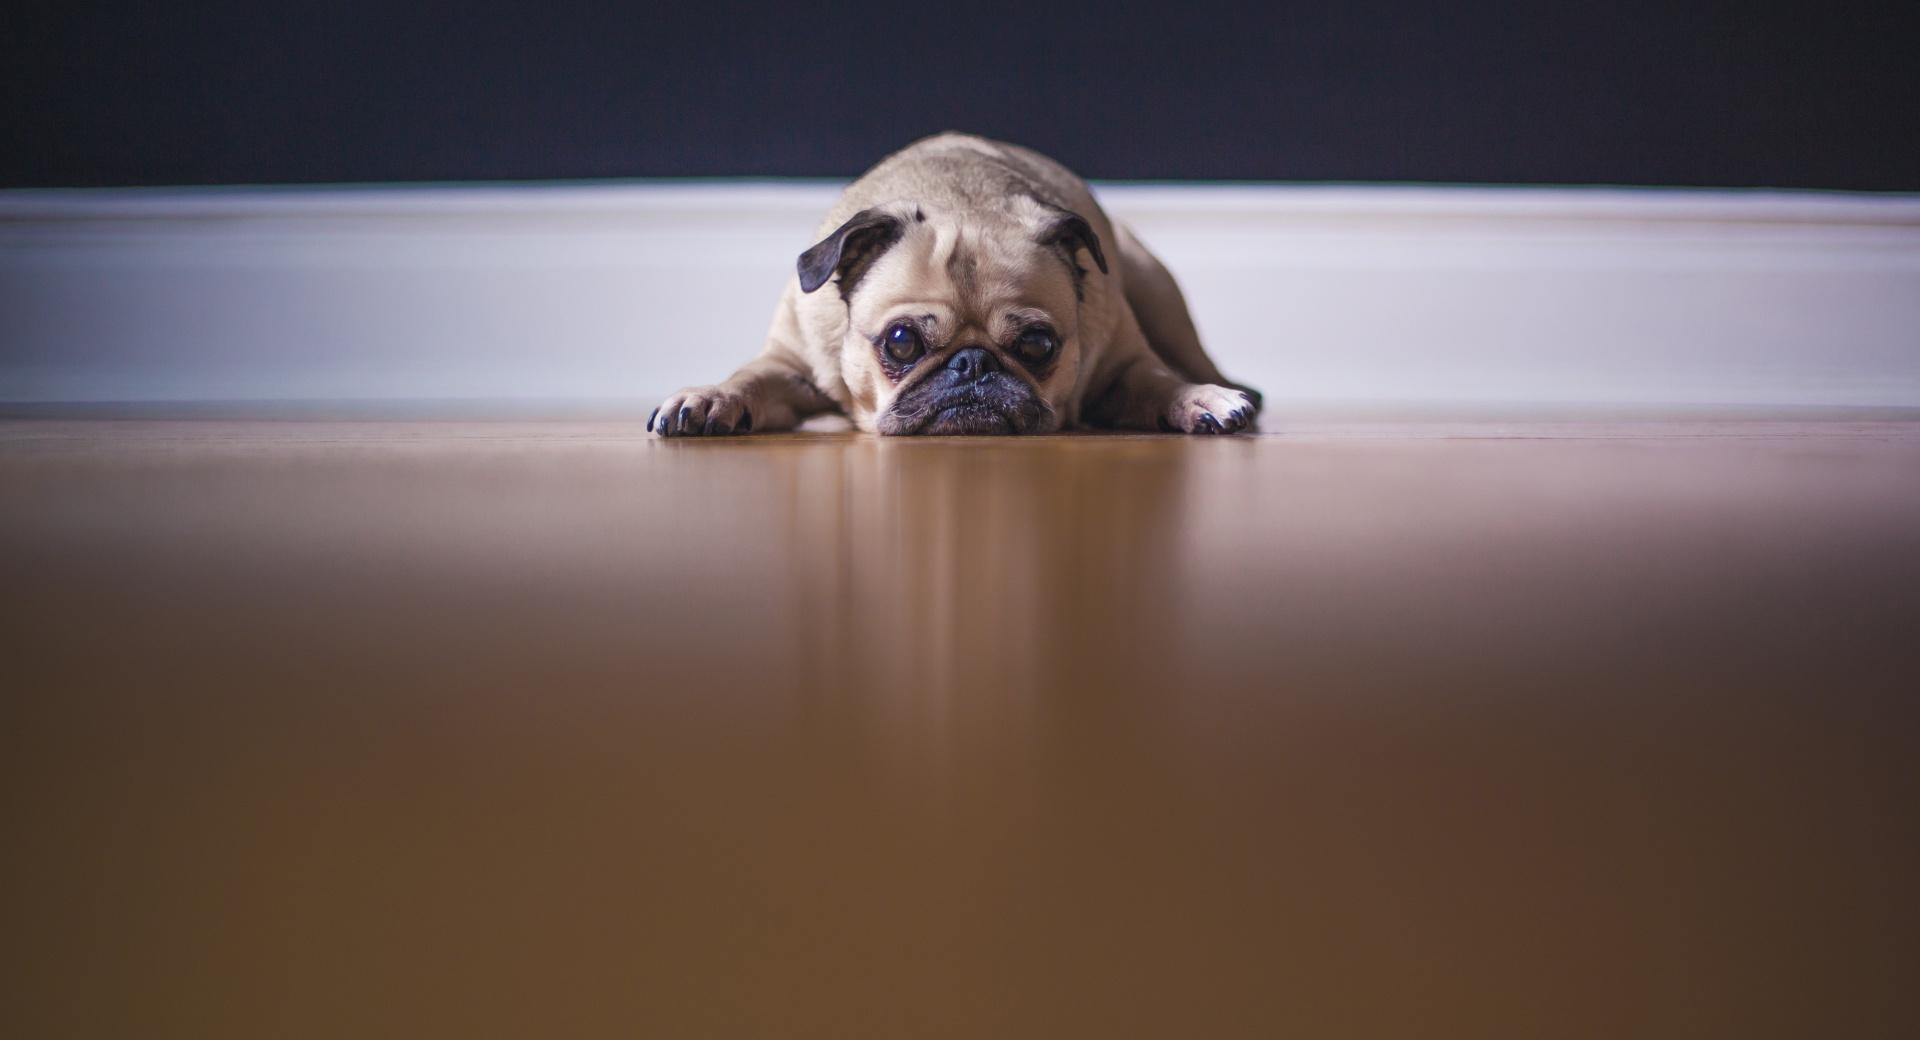 Saddest Pug Dog at 1024 x 768 size wallpapers HD quality